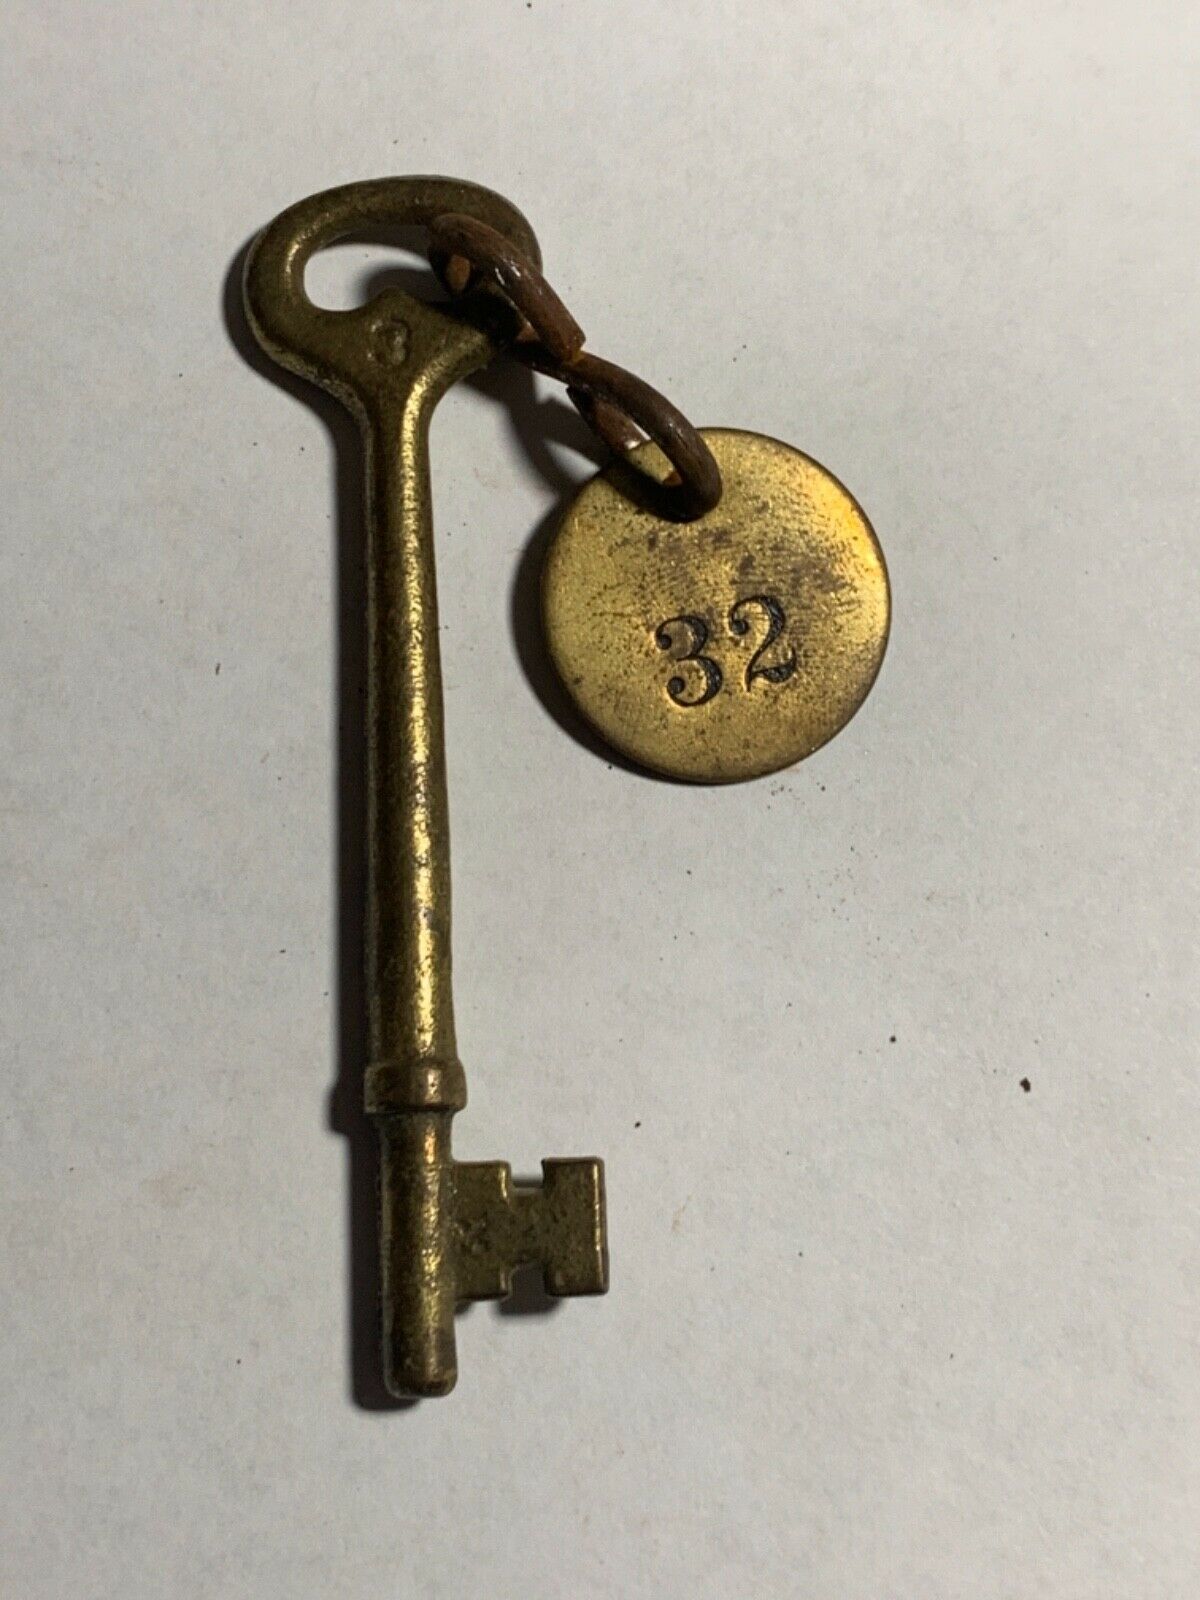 Vintage Antique Hotel Motel Room Key Brass Fob With Skeleton Key #32 1920's-30's